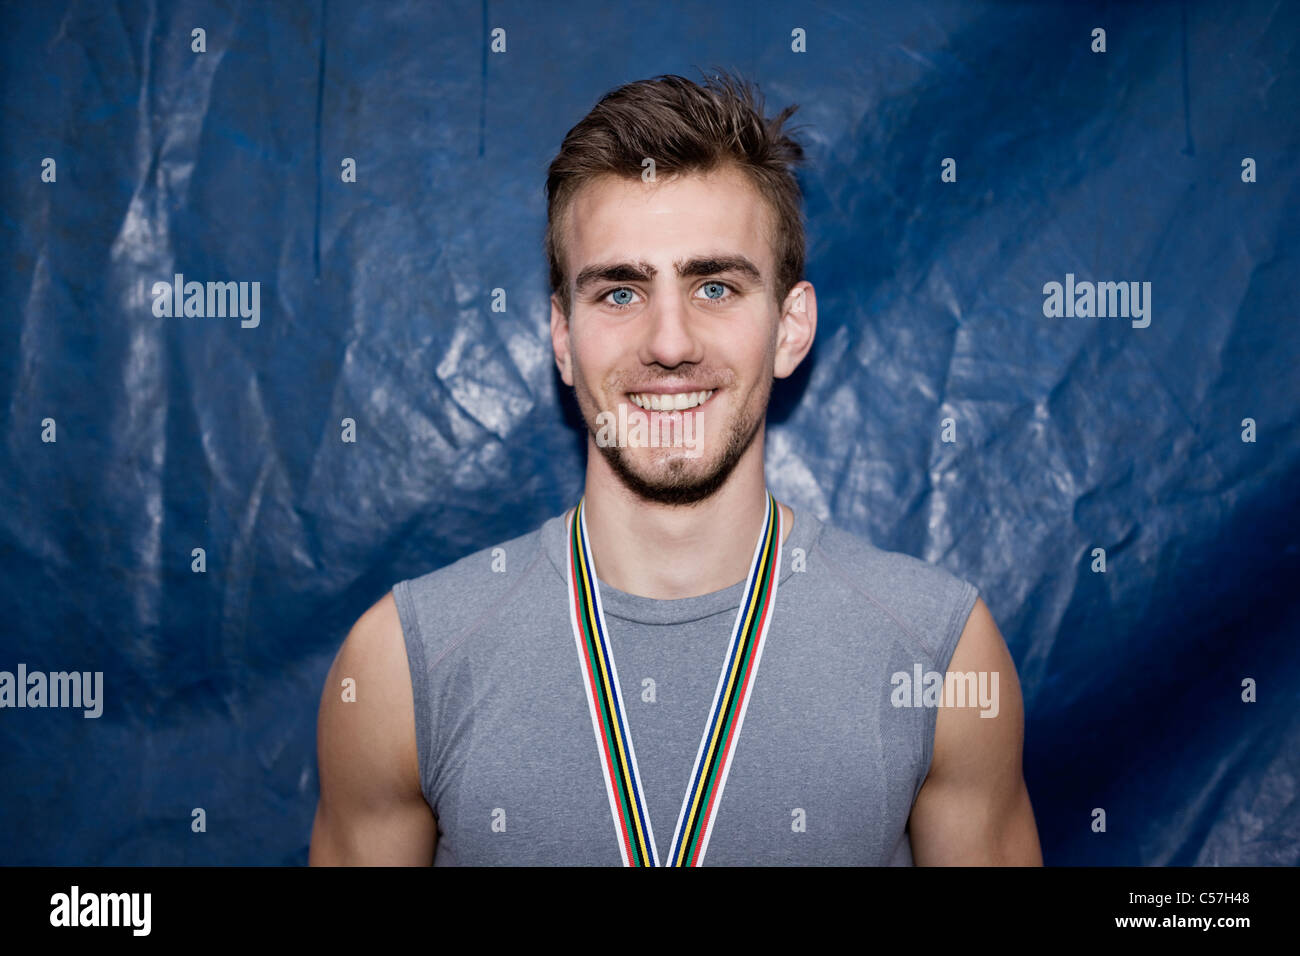 Smiling runner wearing medal Stock Photo